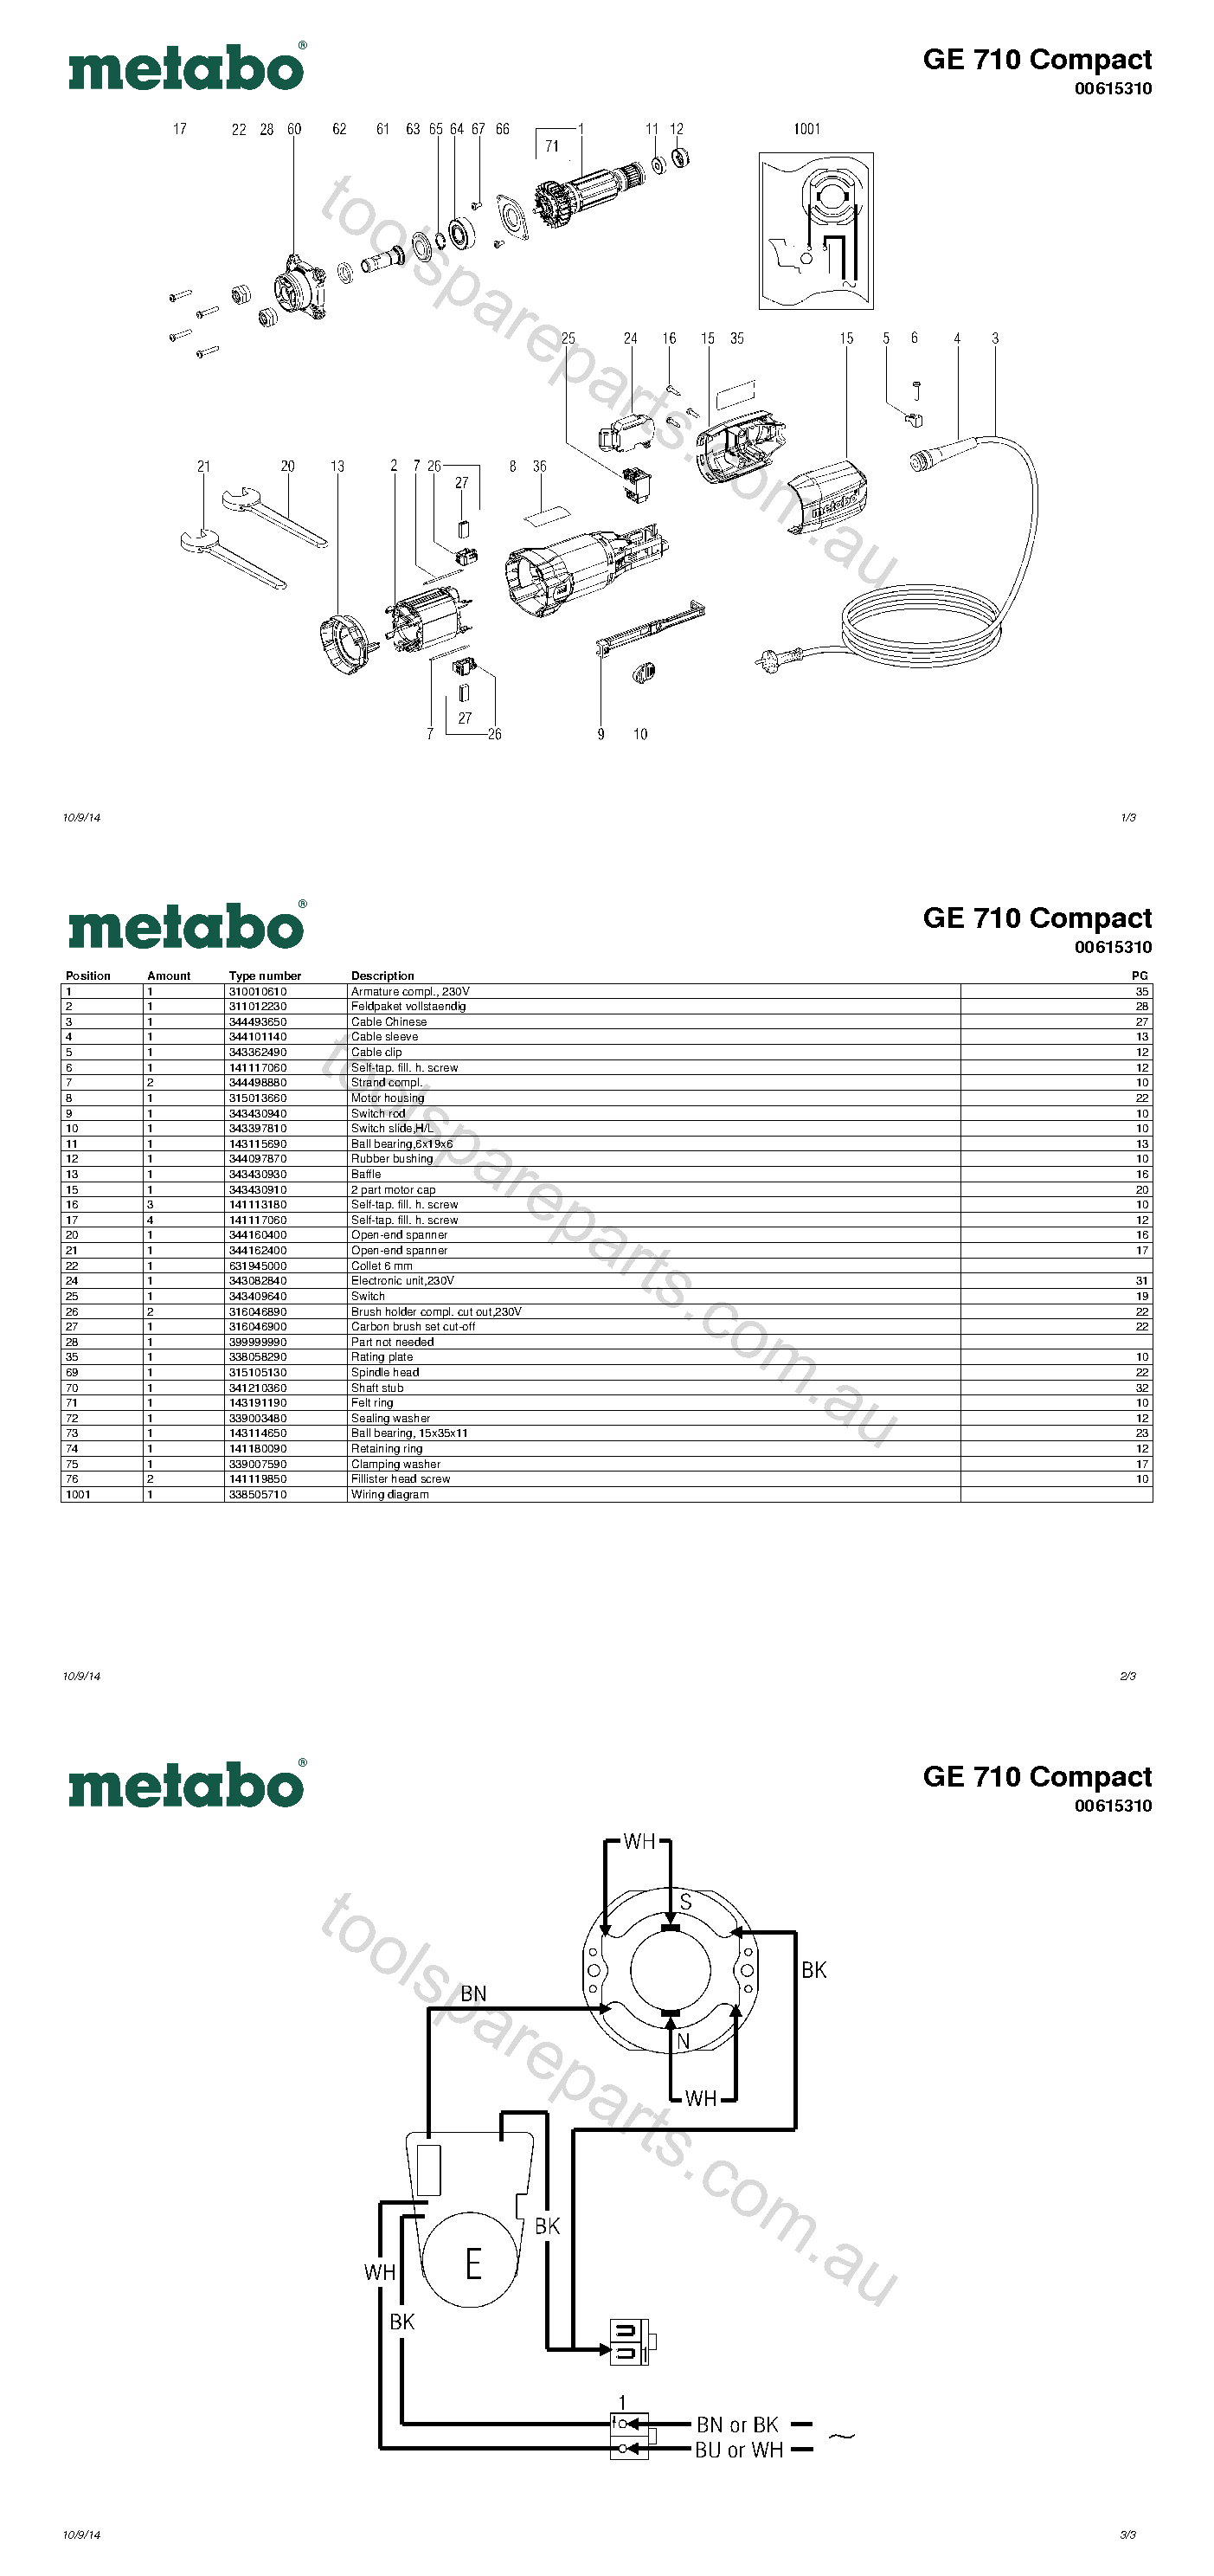 Metabo GE 710 Compact 00615310  Diagram 1